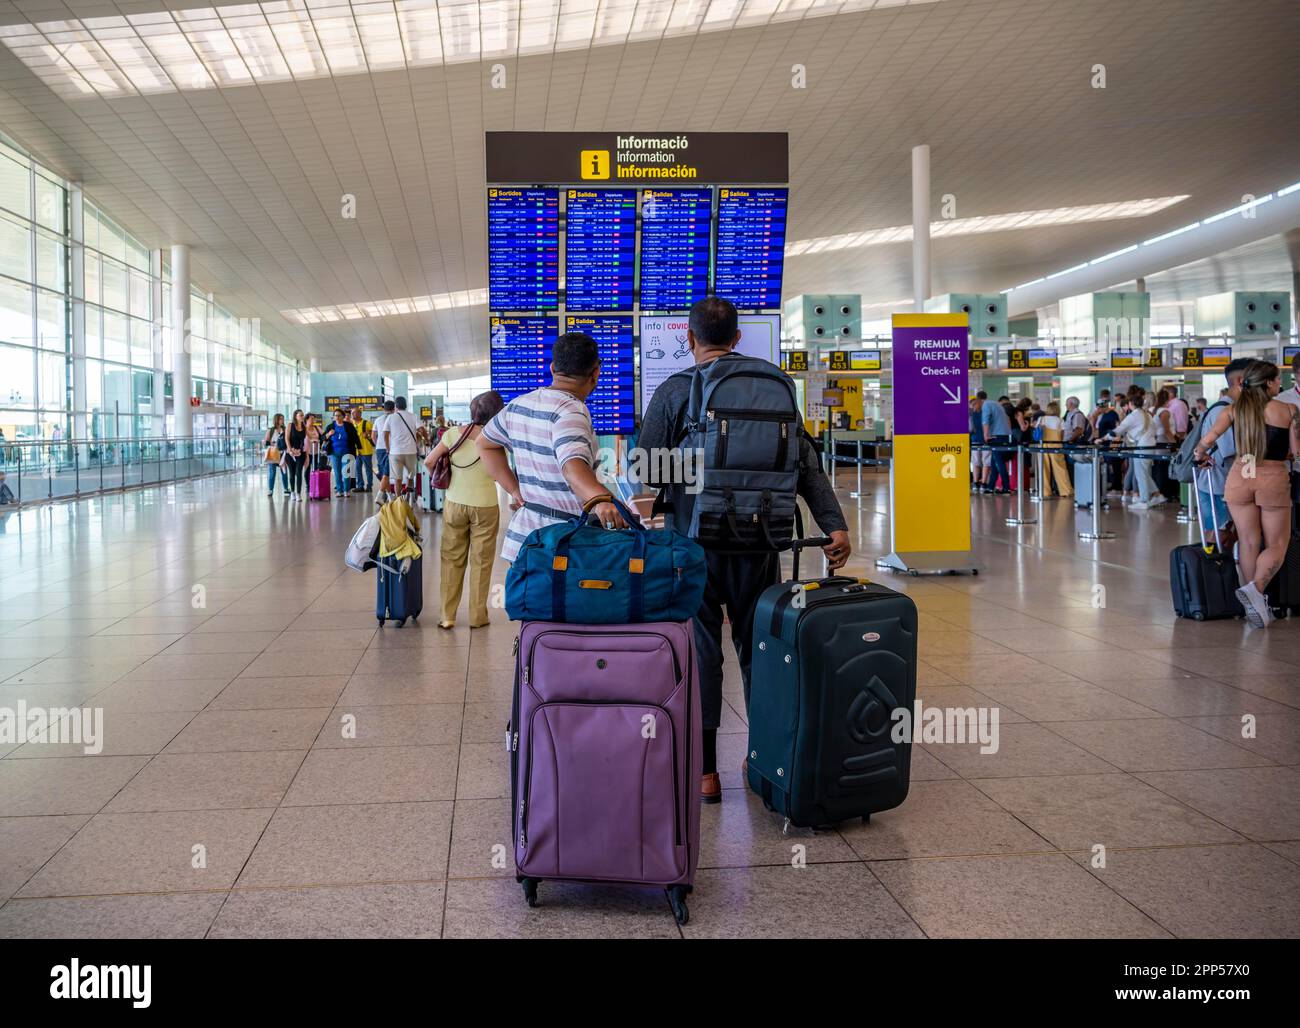 Josep Tarradellas Flughafen Barcelona-El Prat, Passagiere beim Check-in mit Gepäck, Informationstafel, Barcelona, Spanien, Europa Stockfoto